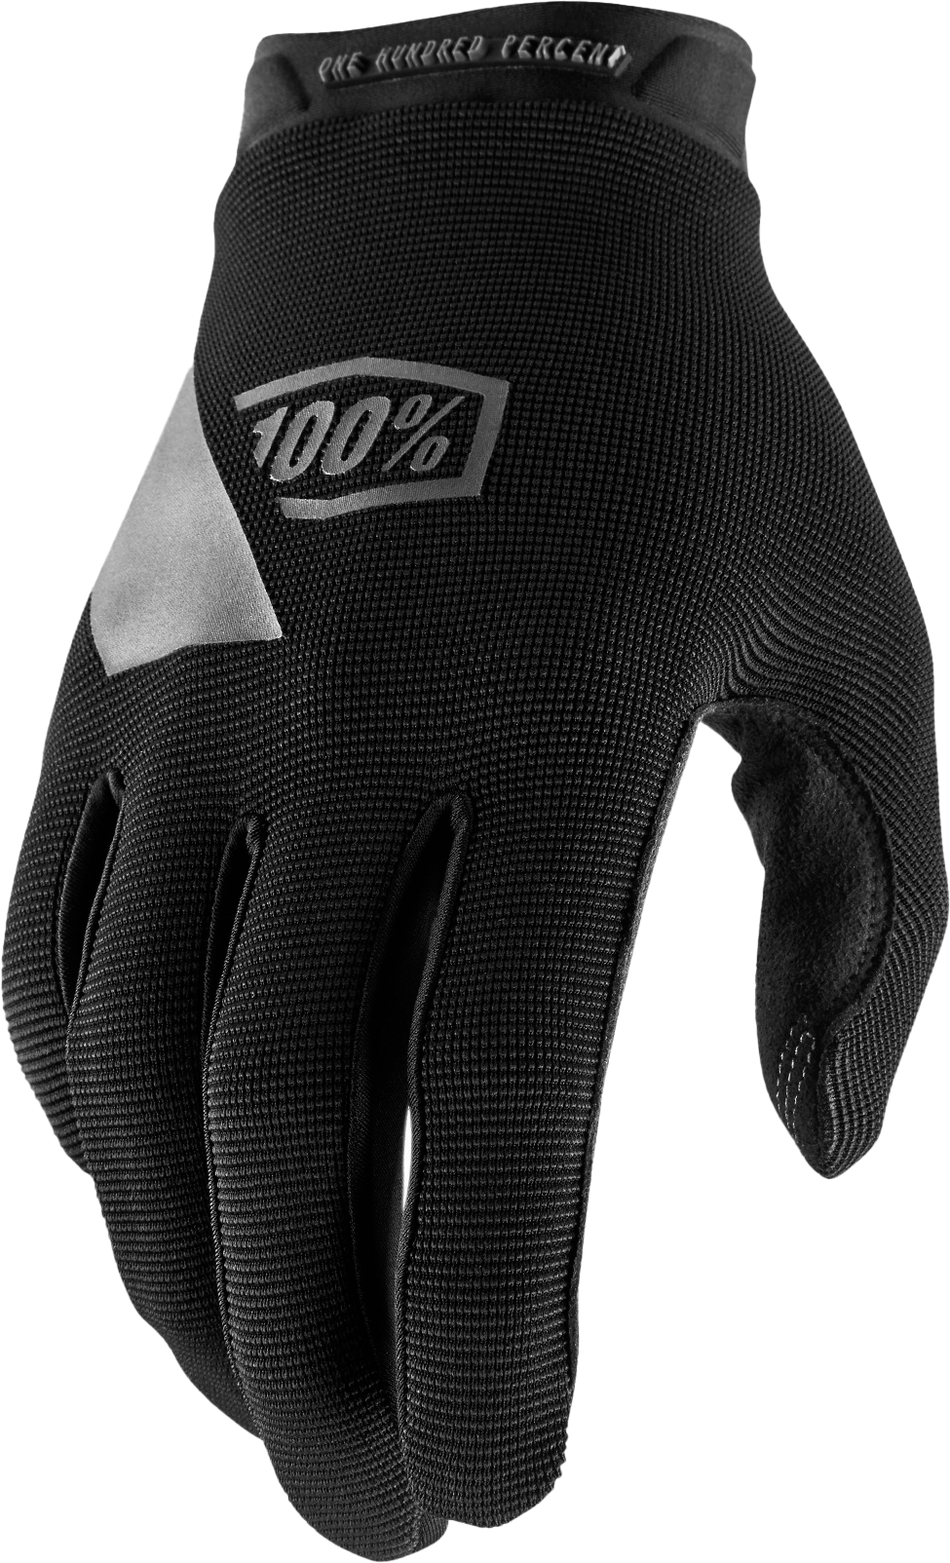 100% Ridecamp Women's Gloves Black Lg 10013-00003